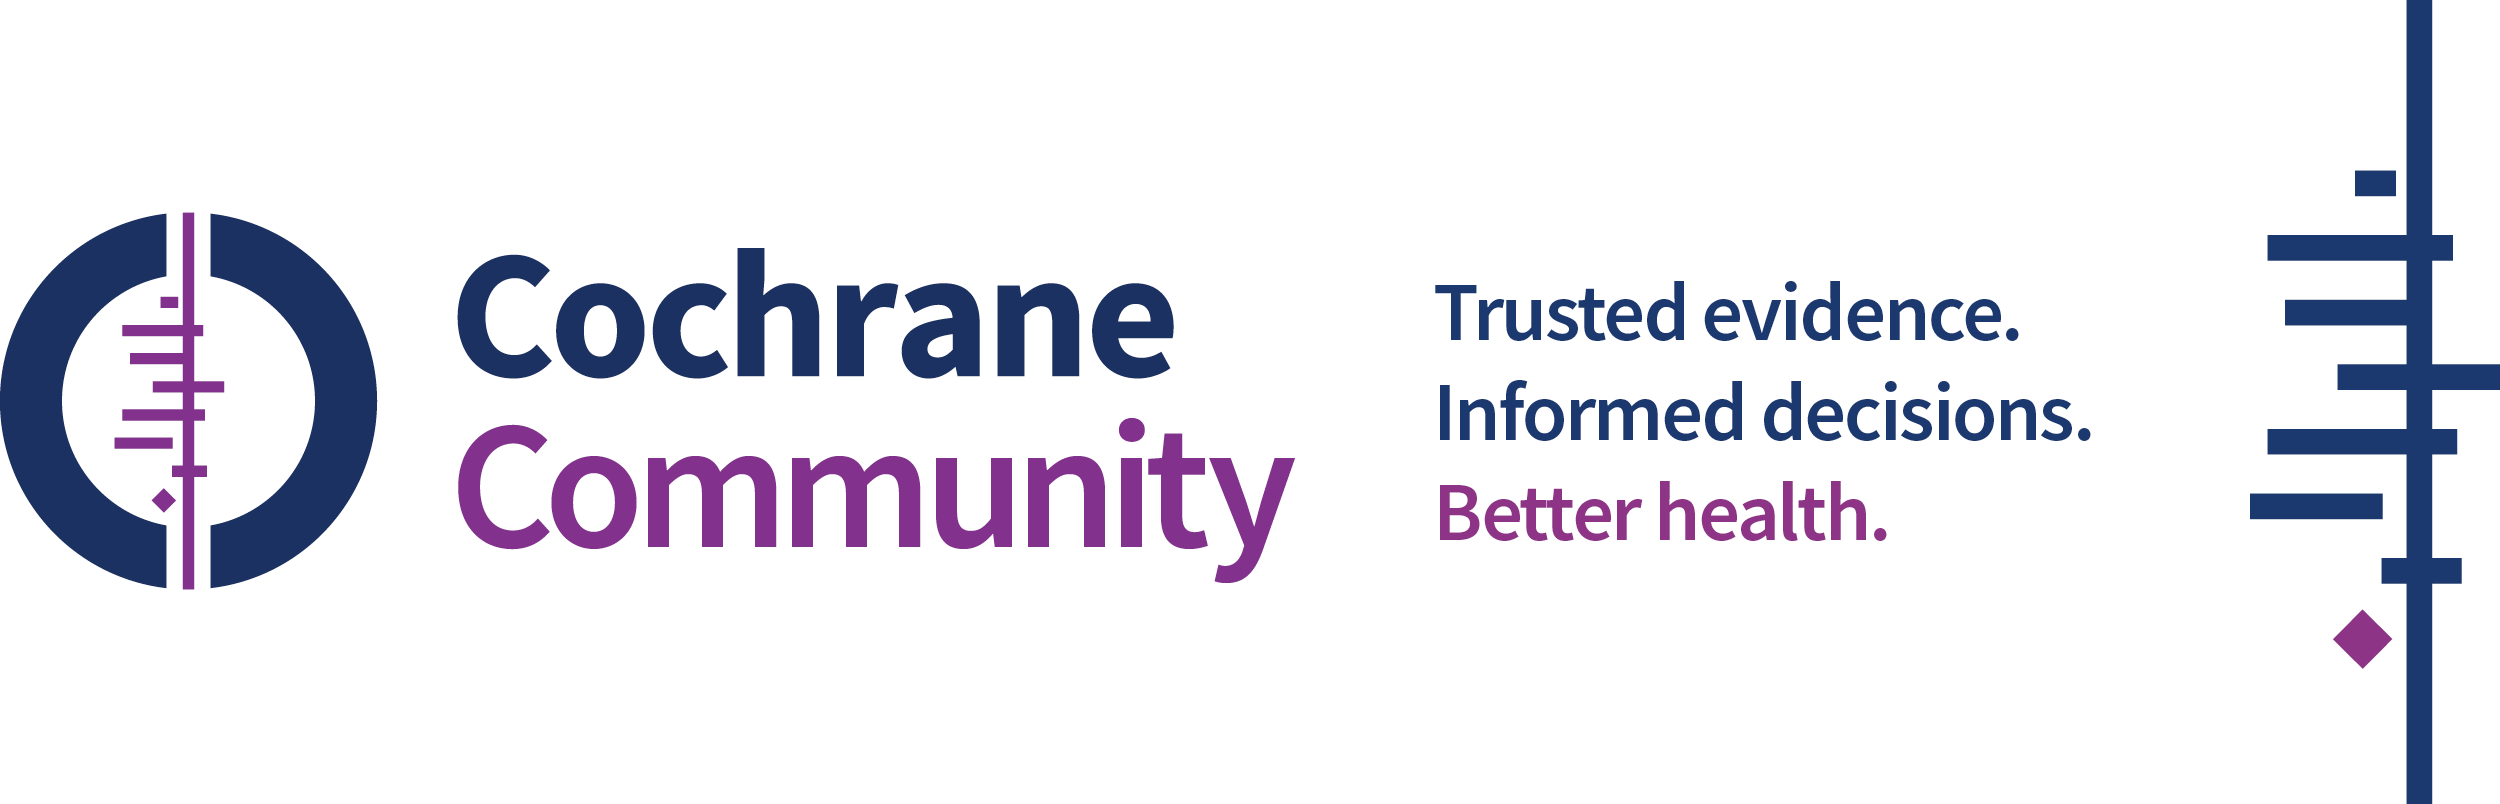 Cochrane Community